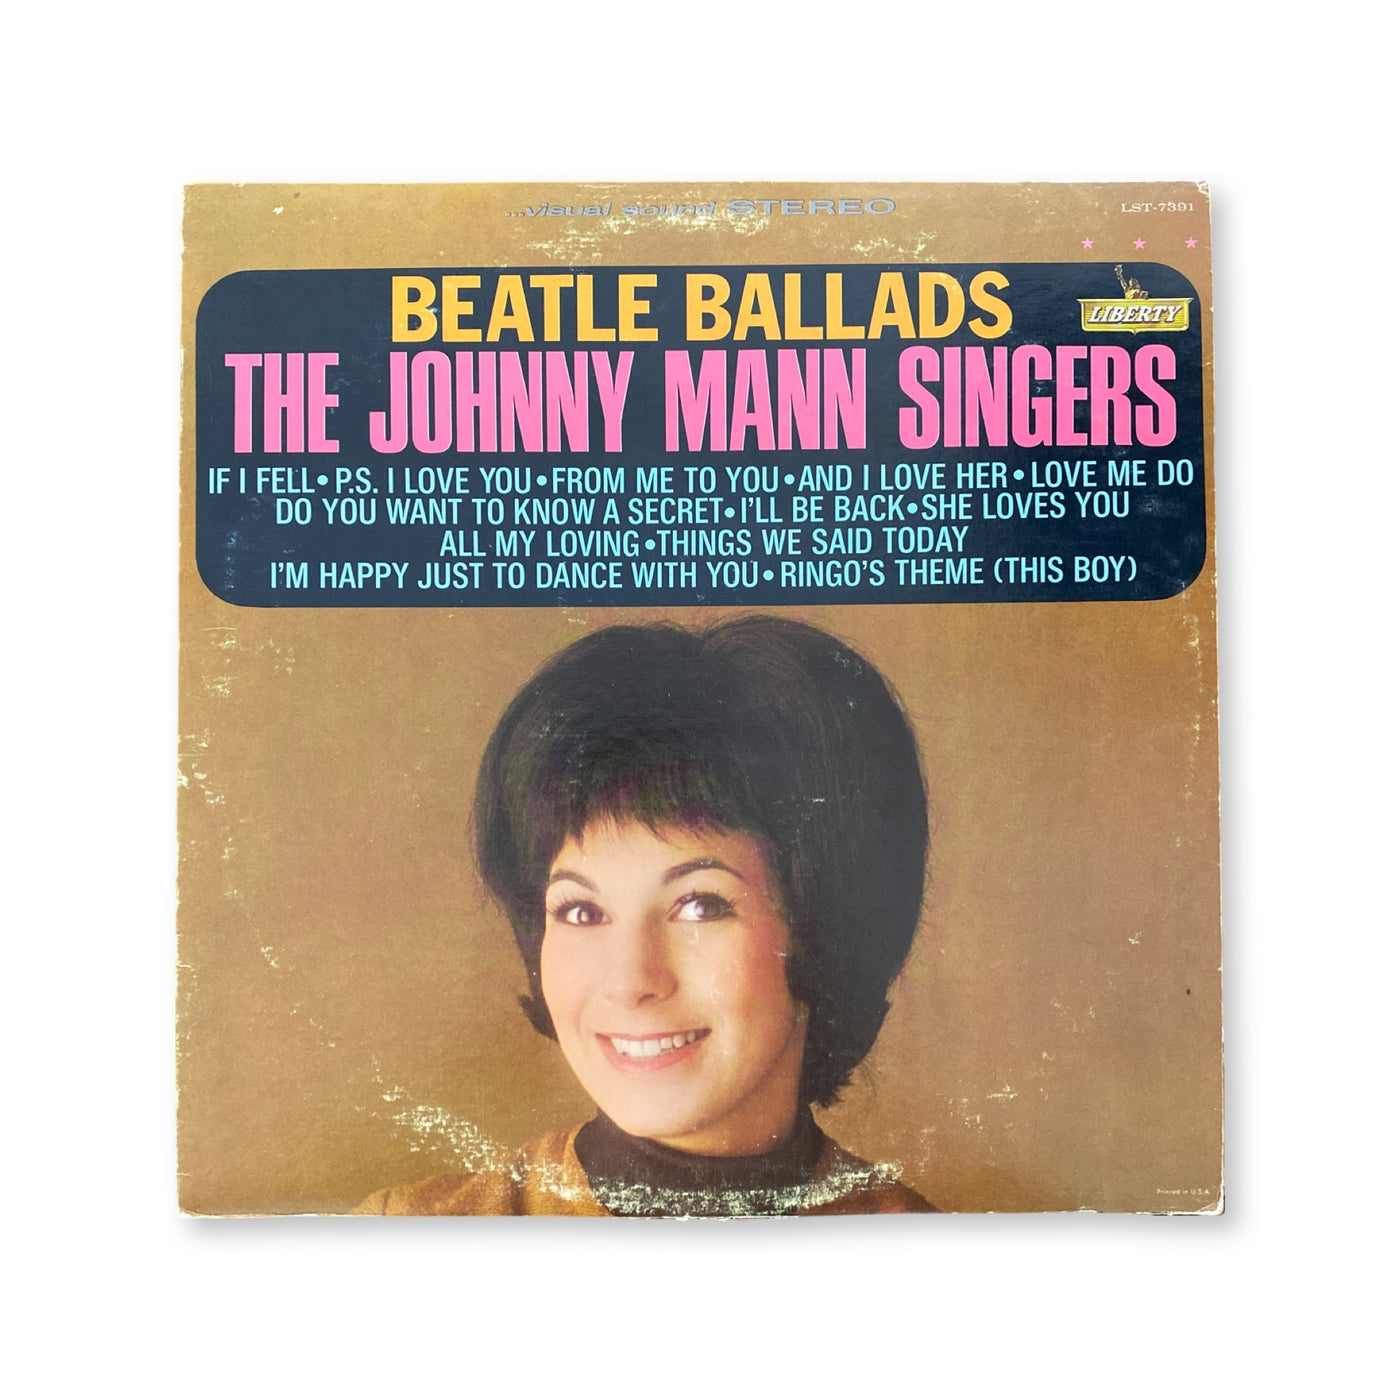 The Johnny Mann Singers. - Beatle Ballads